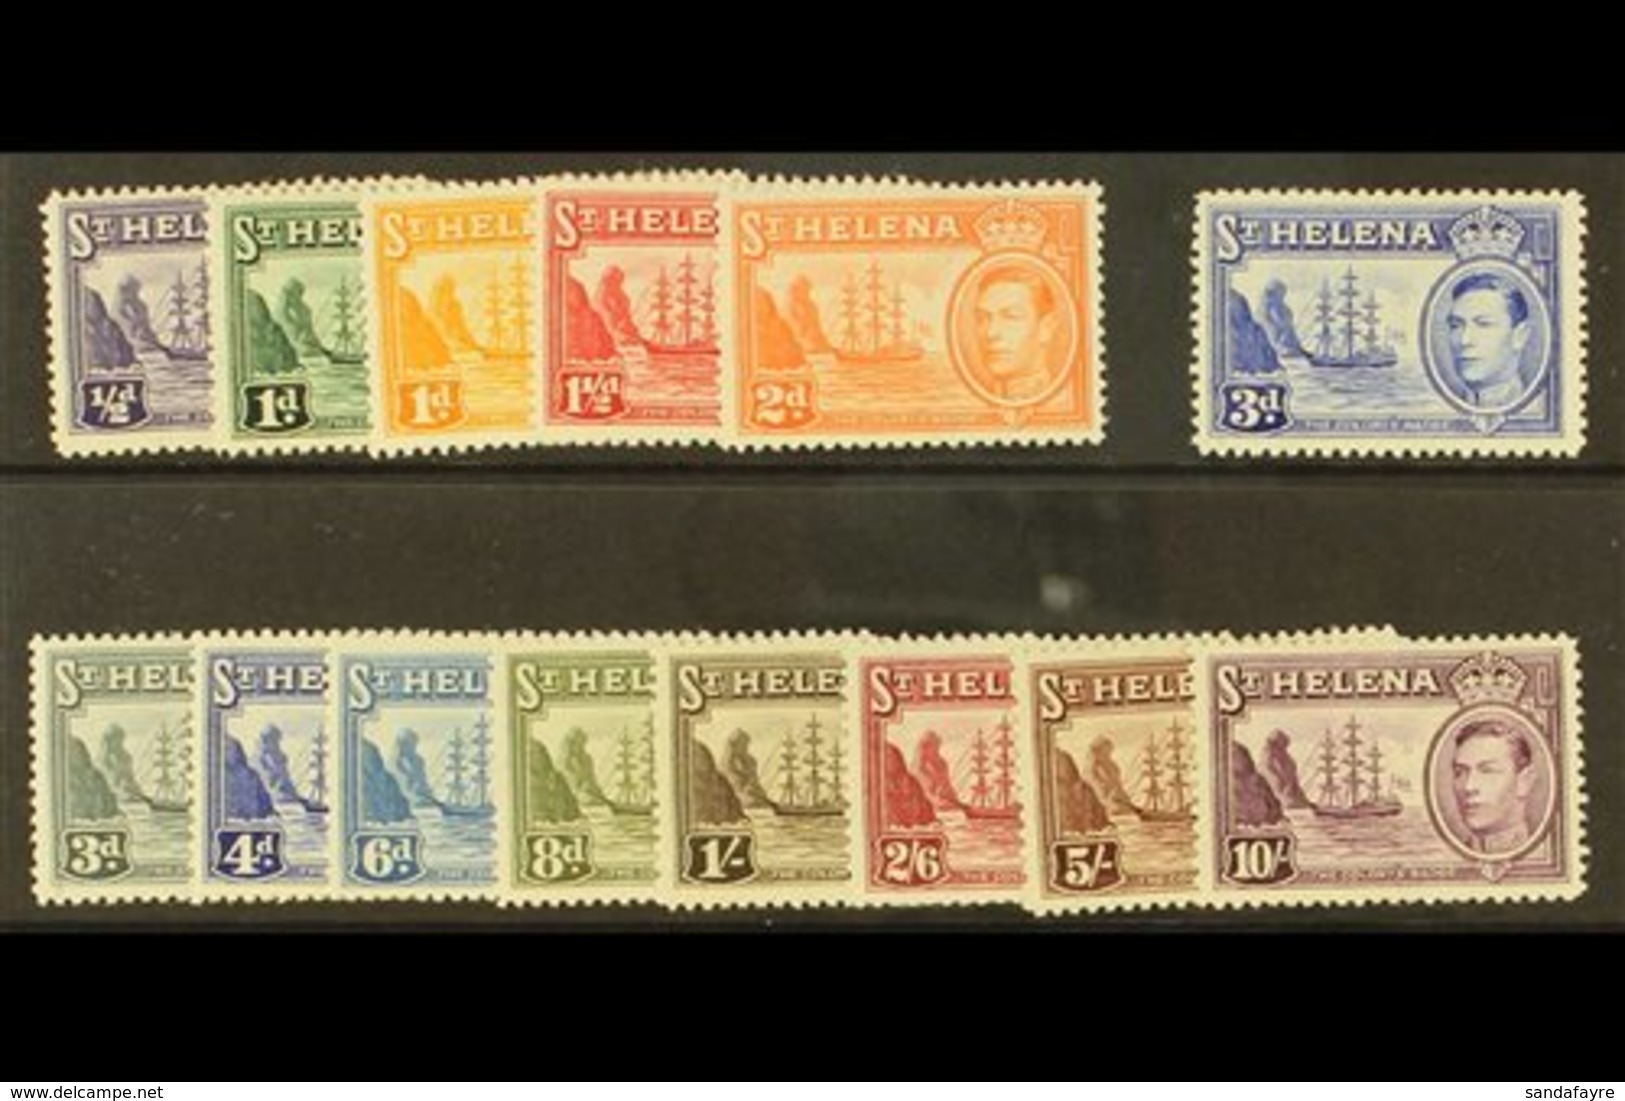 1938-44 Complete Definitive Set, SG 131/140, Very Fine Mint. (14 Stamps) For More Images, Please Visit Http://www.sandaf - Saint Helena Island